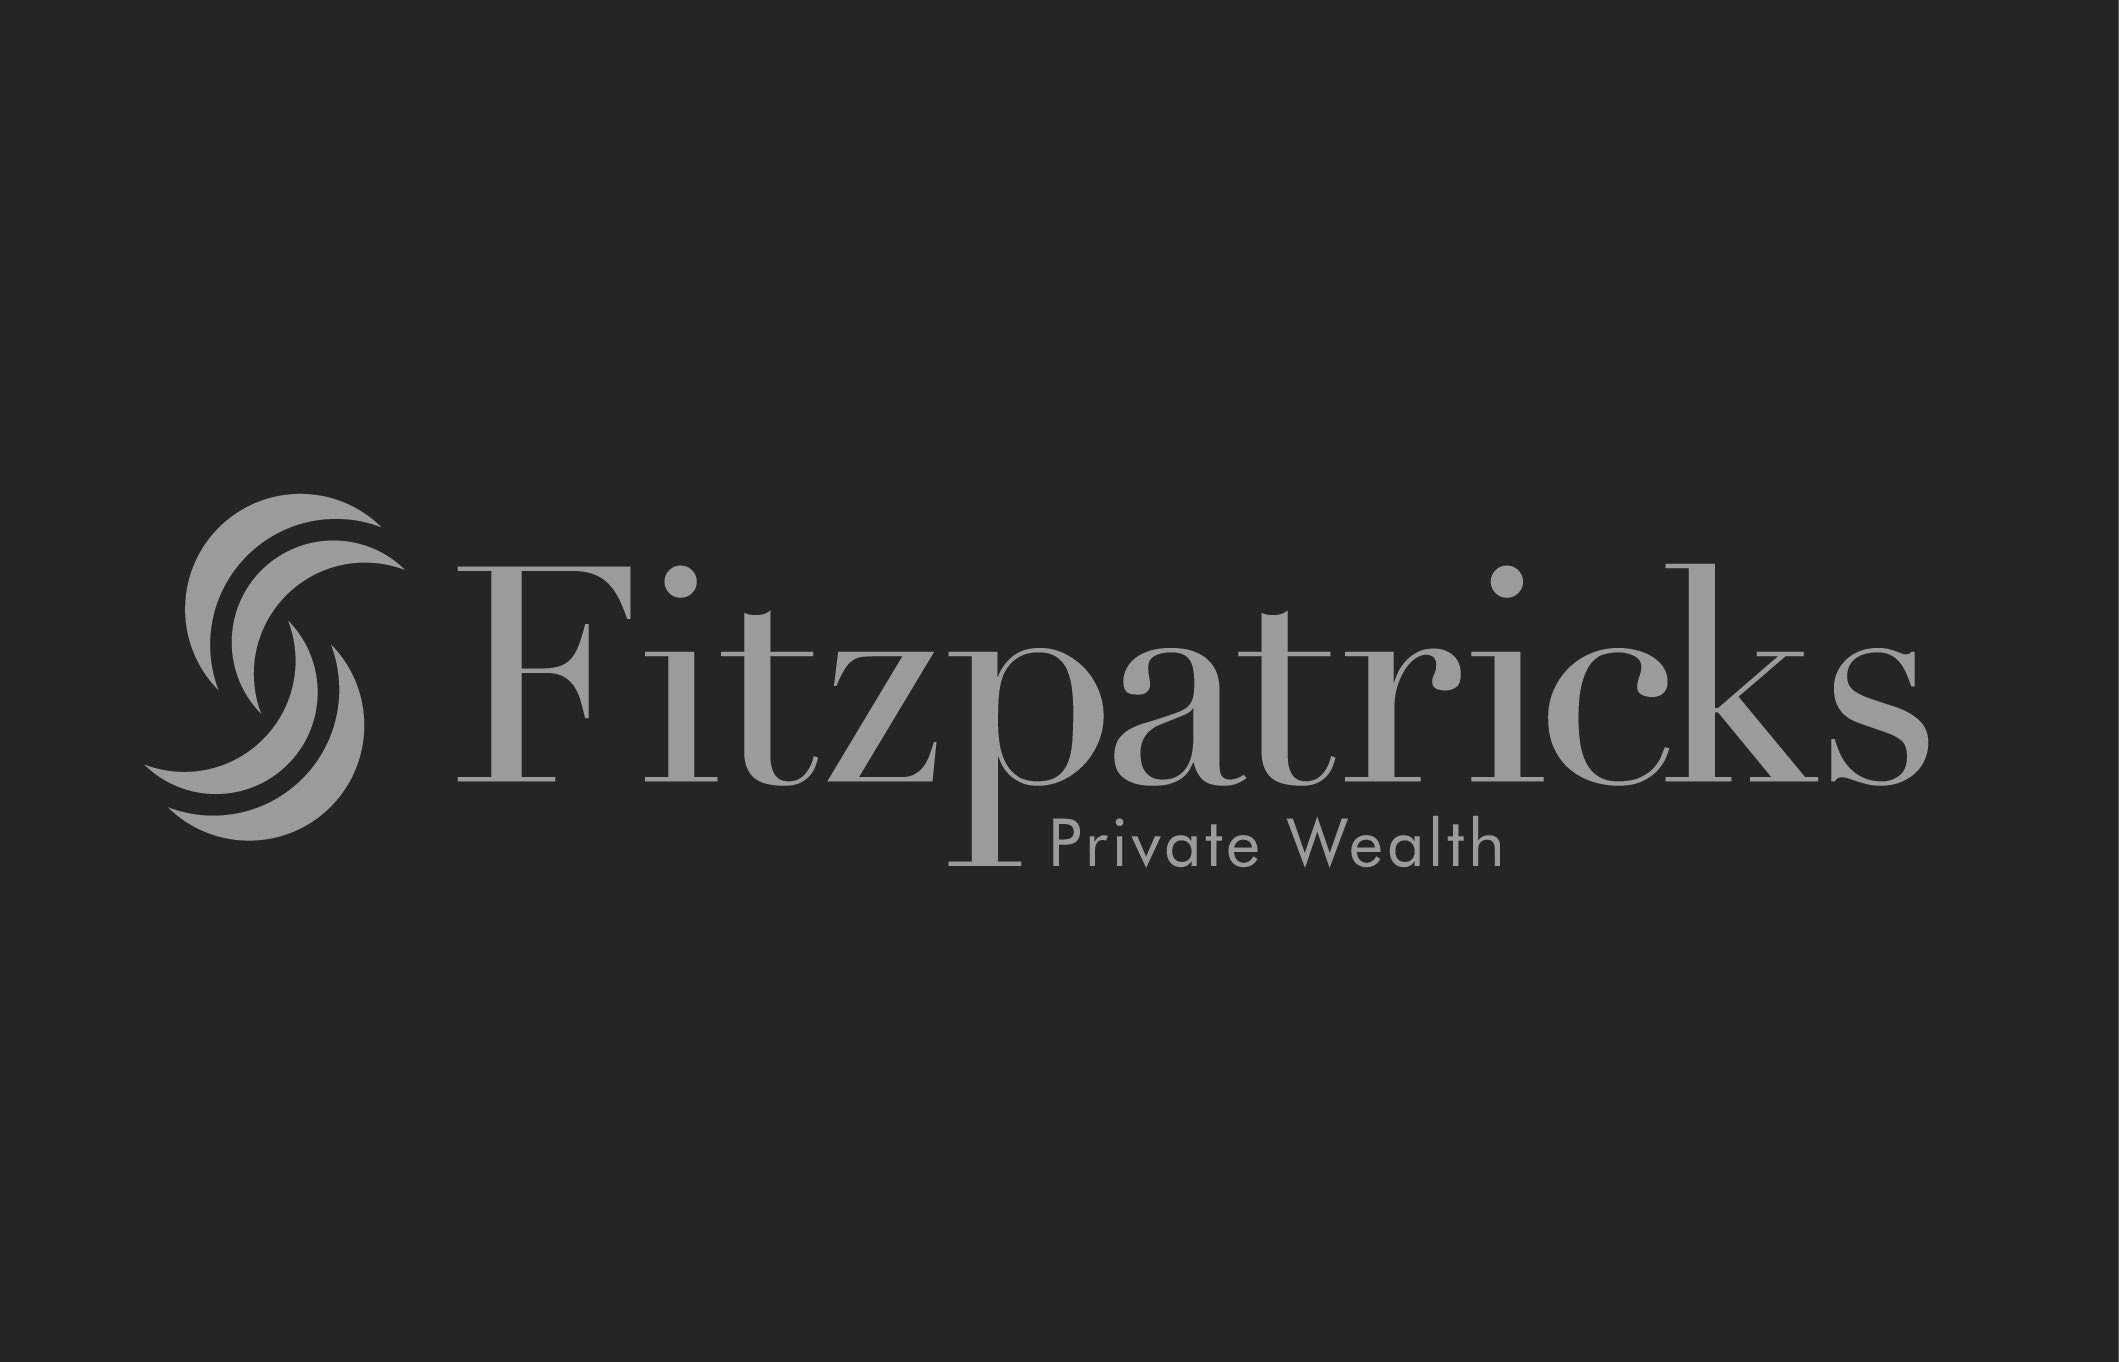 Fitzpatricks logo